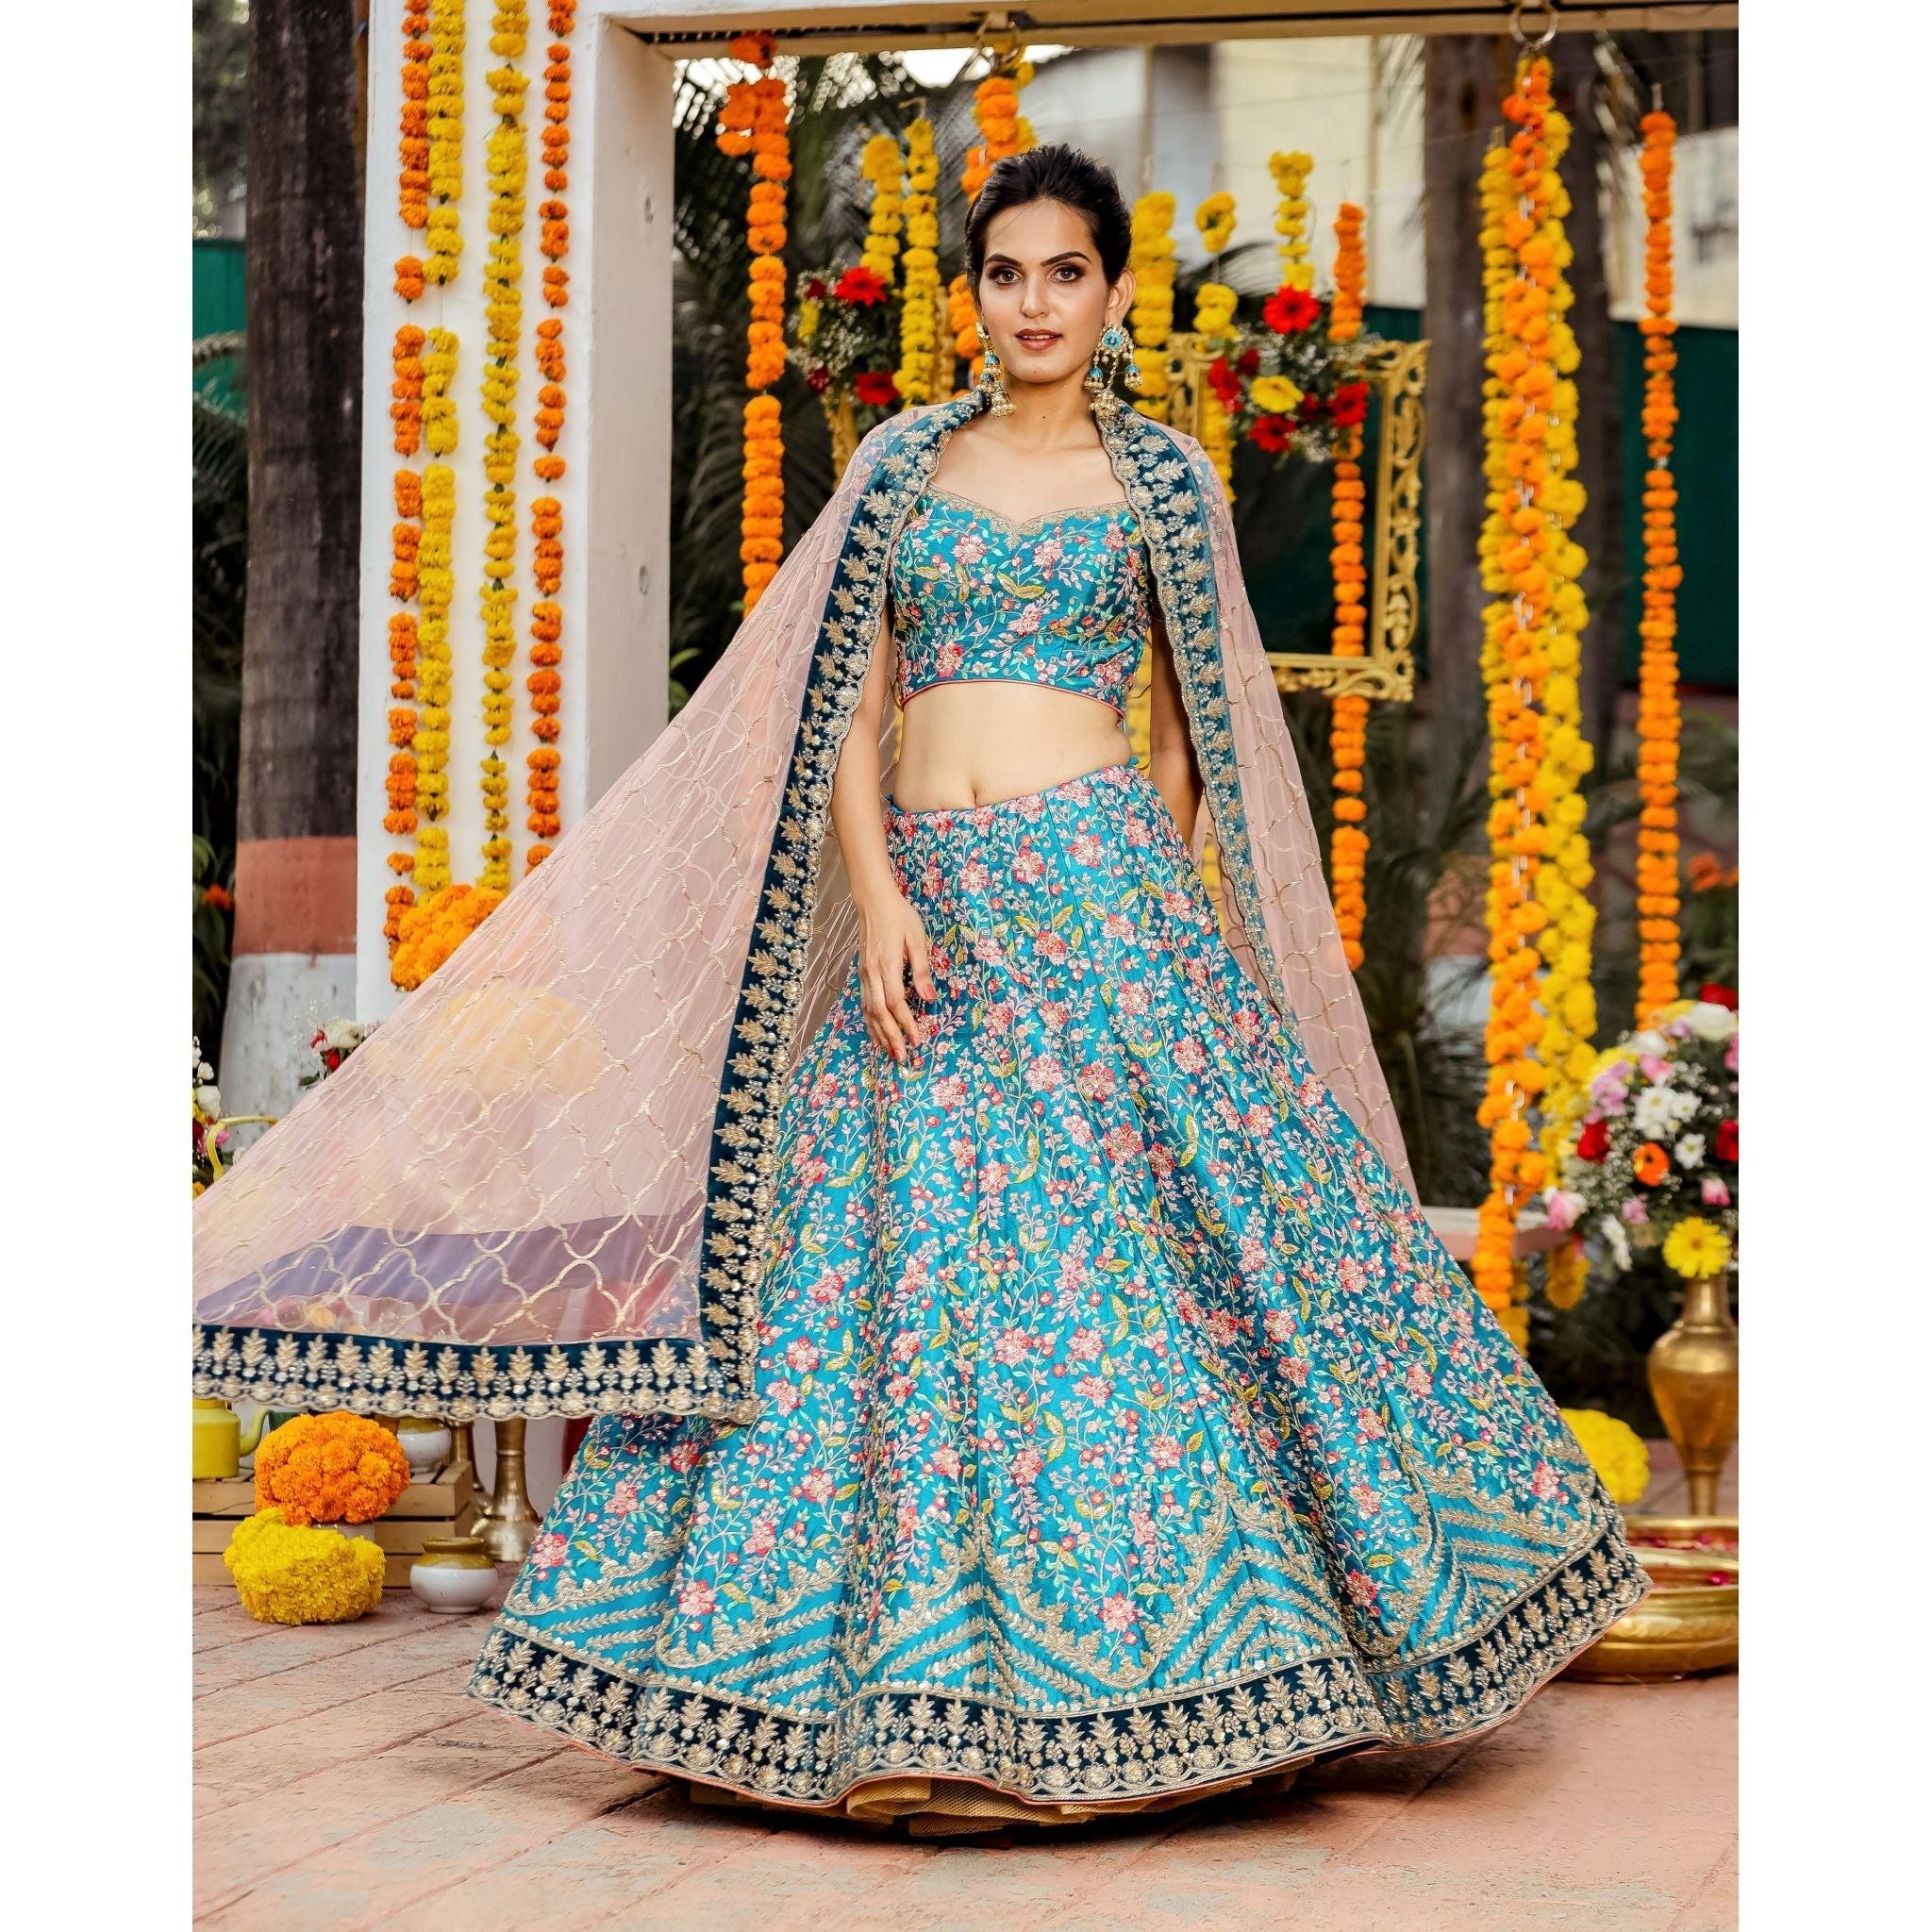 Cyan Blue Floral Lehenga Set - Indian Designer Bridal Wedding Outfit